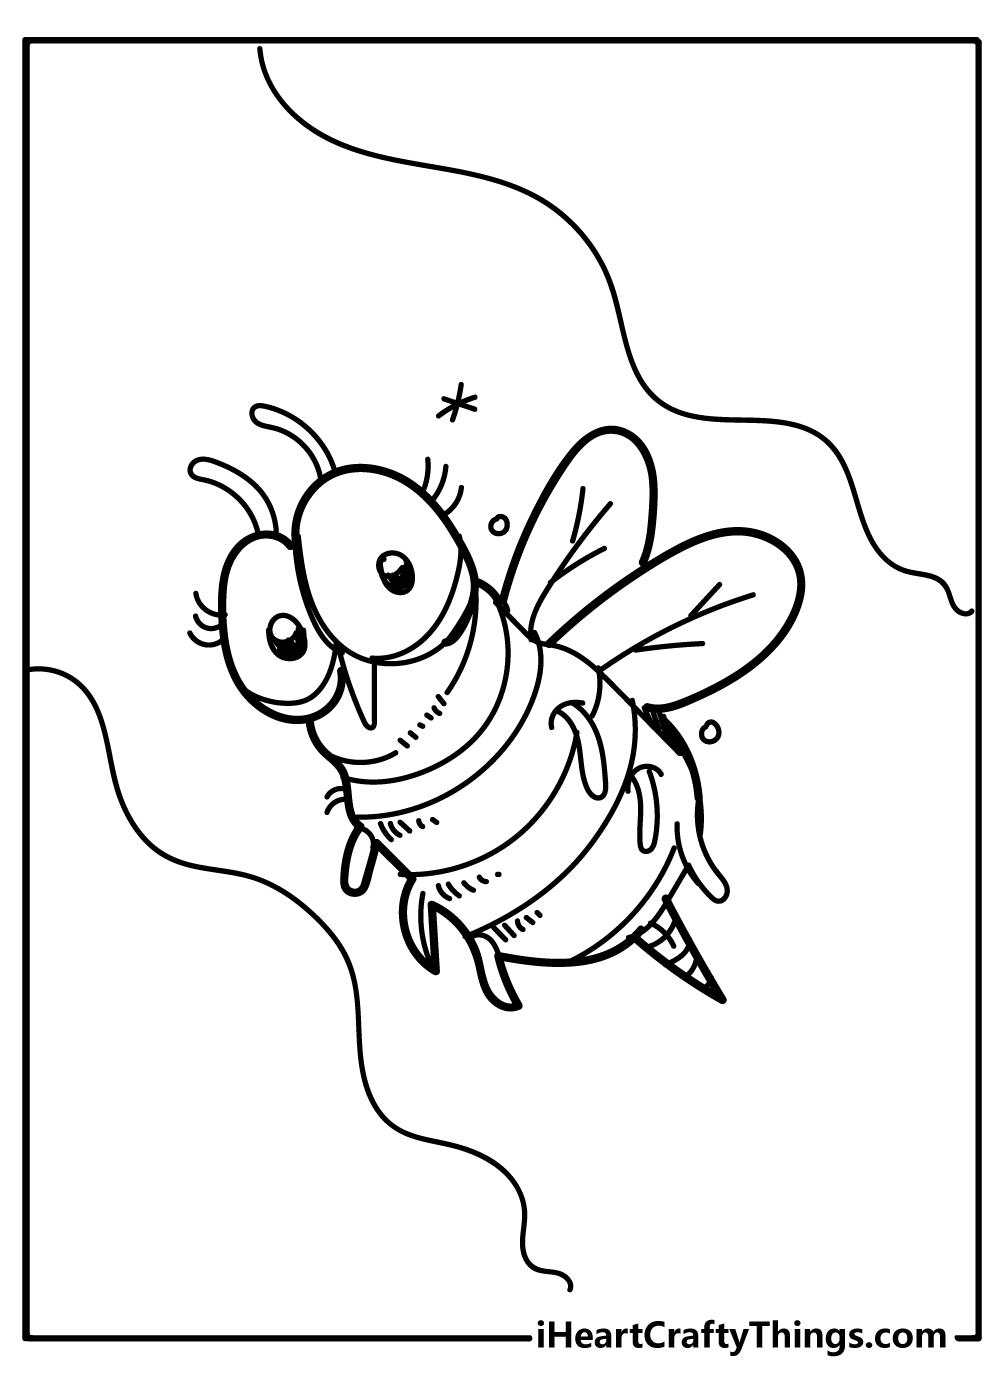 Bug Coloring Original Sheet for children free download